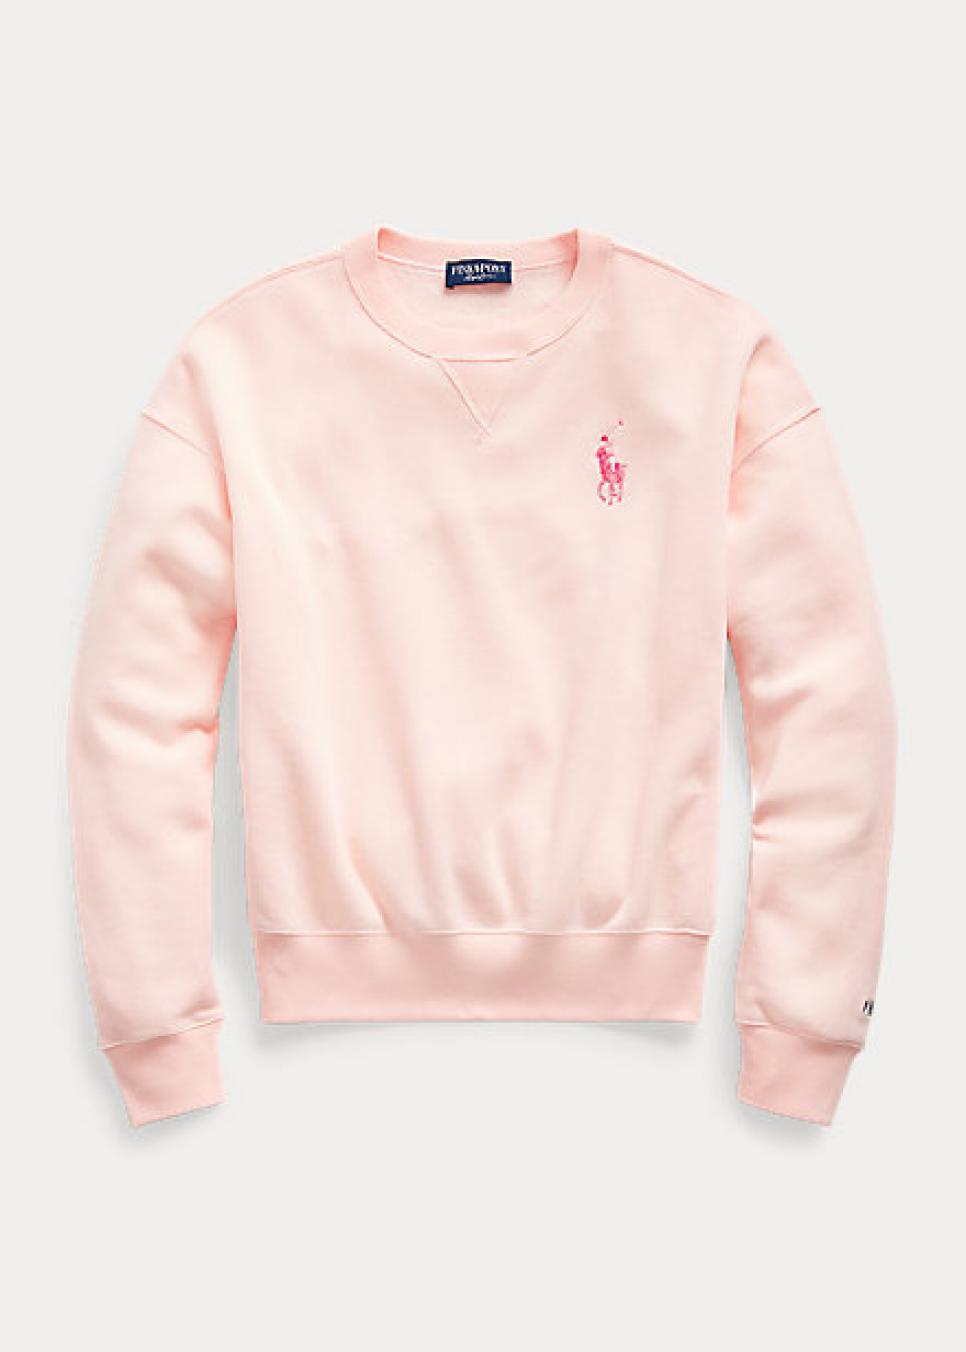 Skyldig Udfør tobak Pink Pony Fleece Crewneck Sweatshirt | Golf Equipment: Clubs, Balls, Bags |  GolfDigest.com